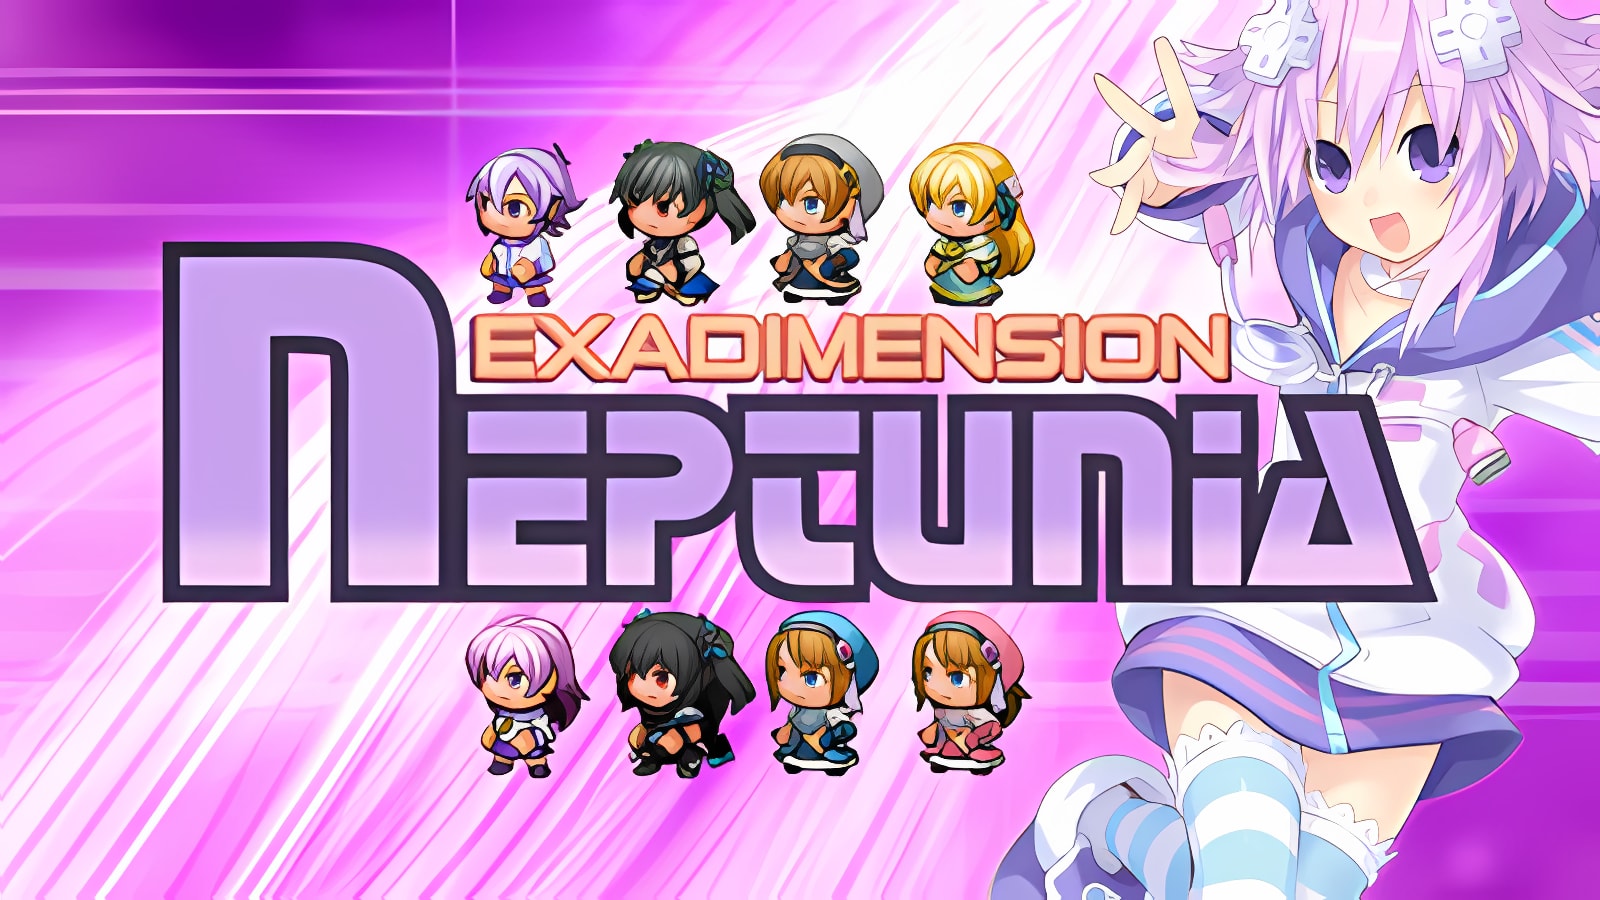 Download Exadimension Neptunia Install Latest App downloader